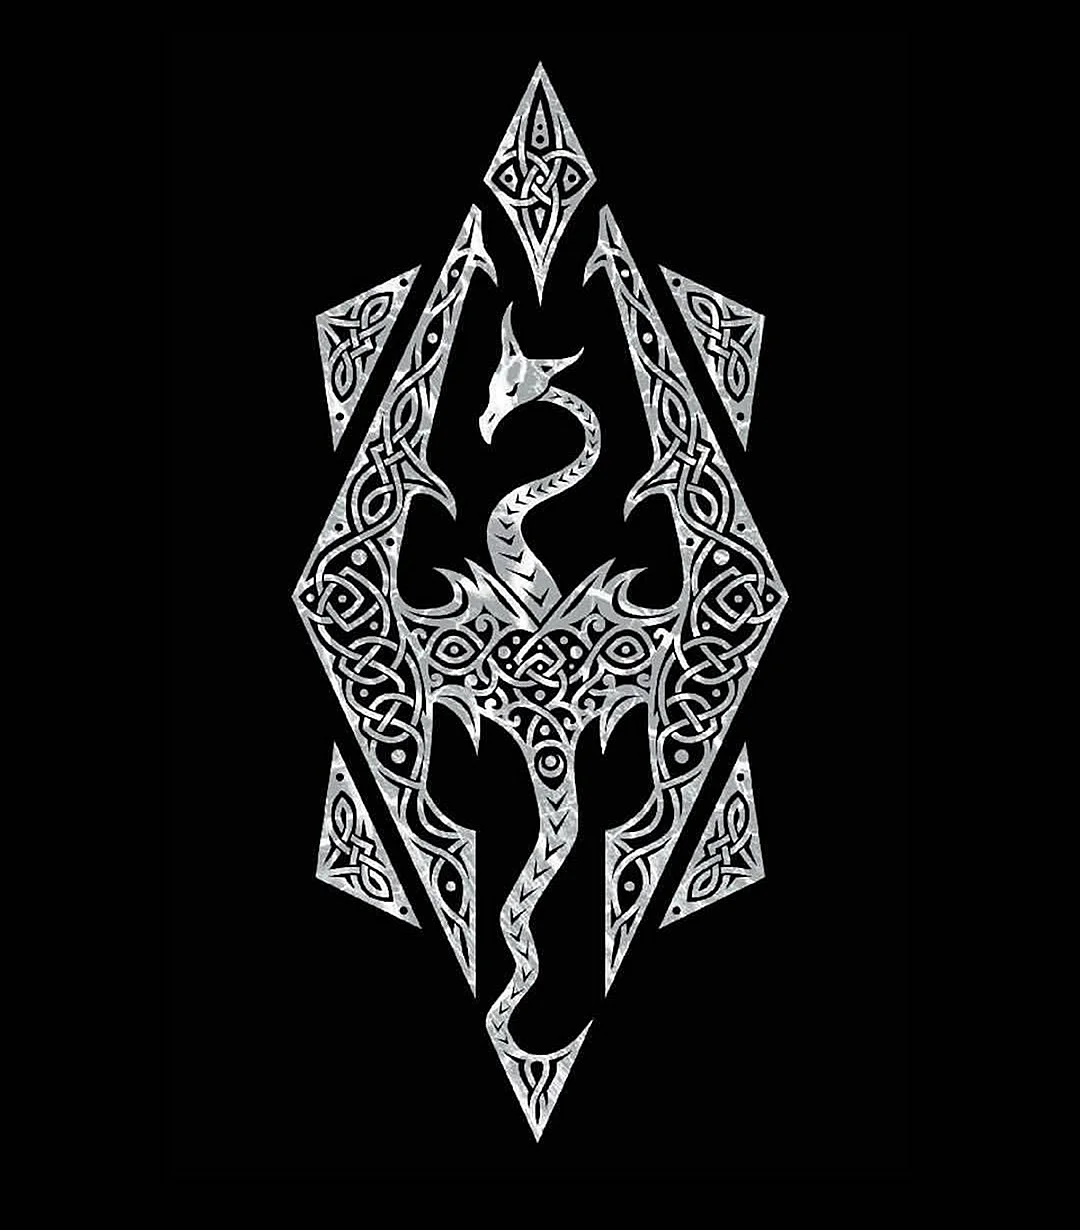 The Elder Scrolls v Skyrim логотип